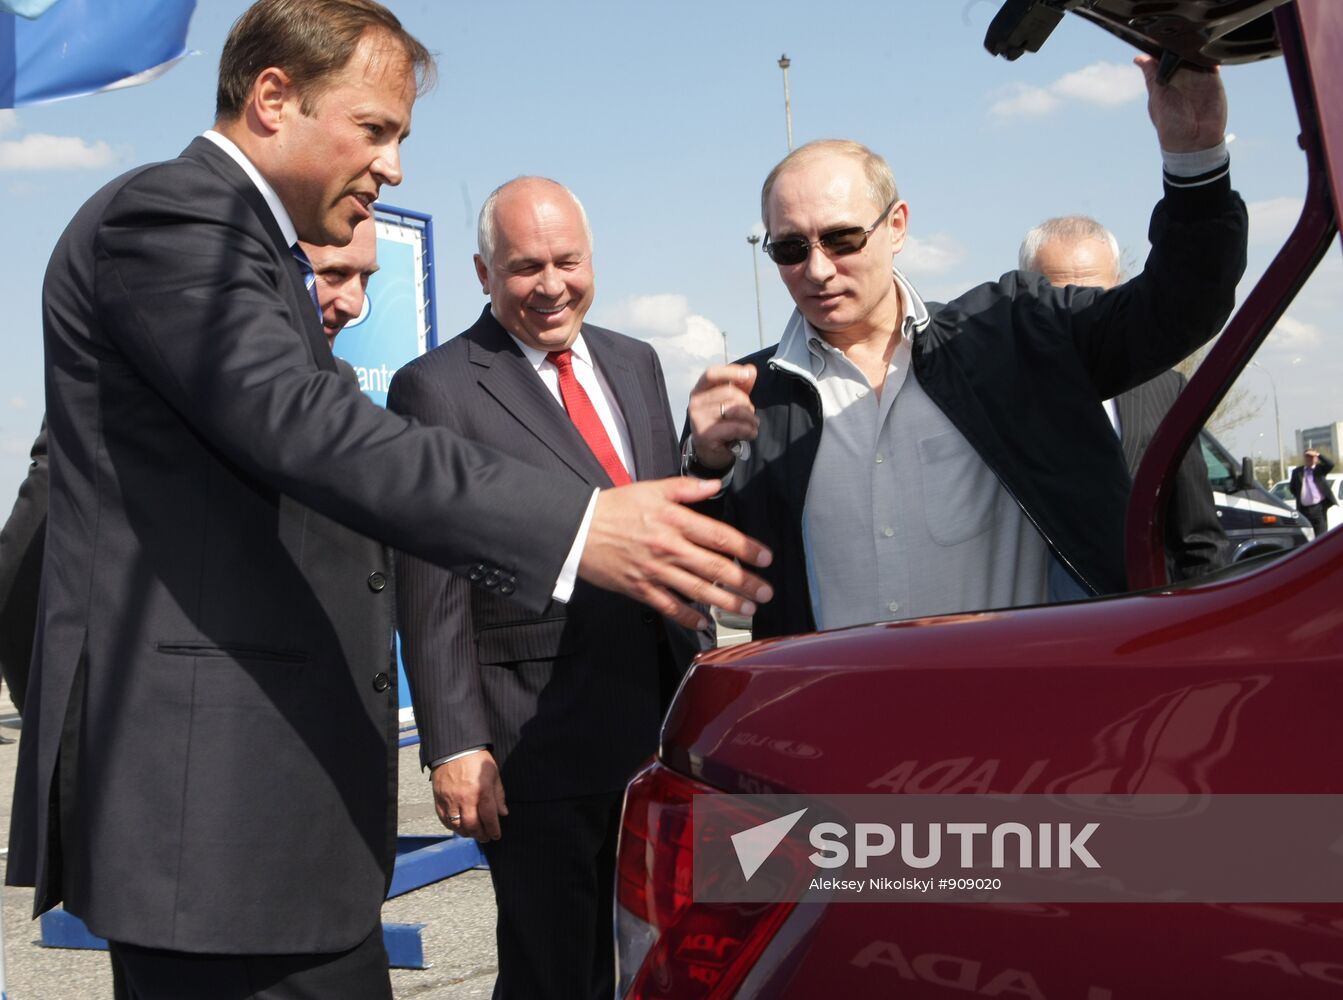 Vladimir Putin visits Tolyatti